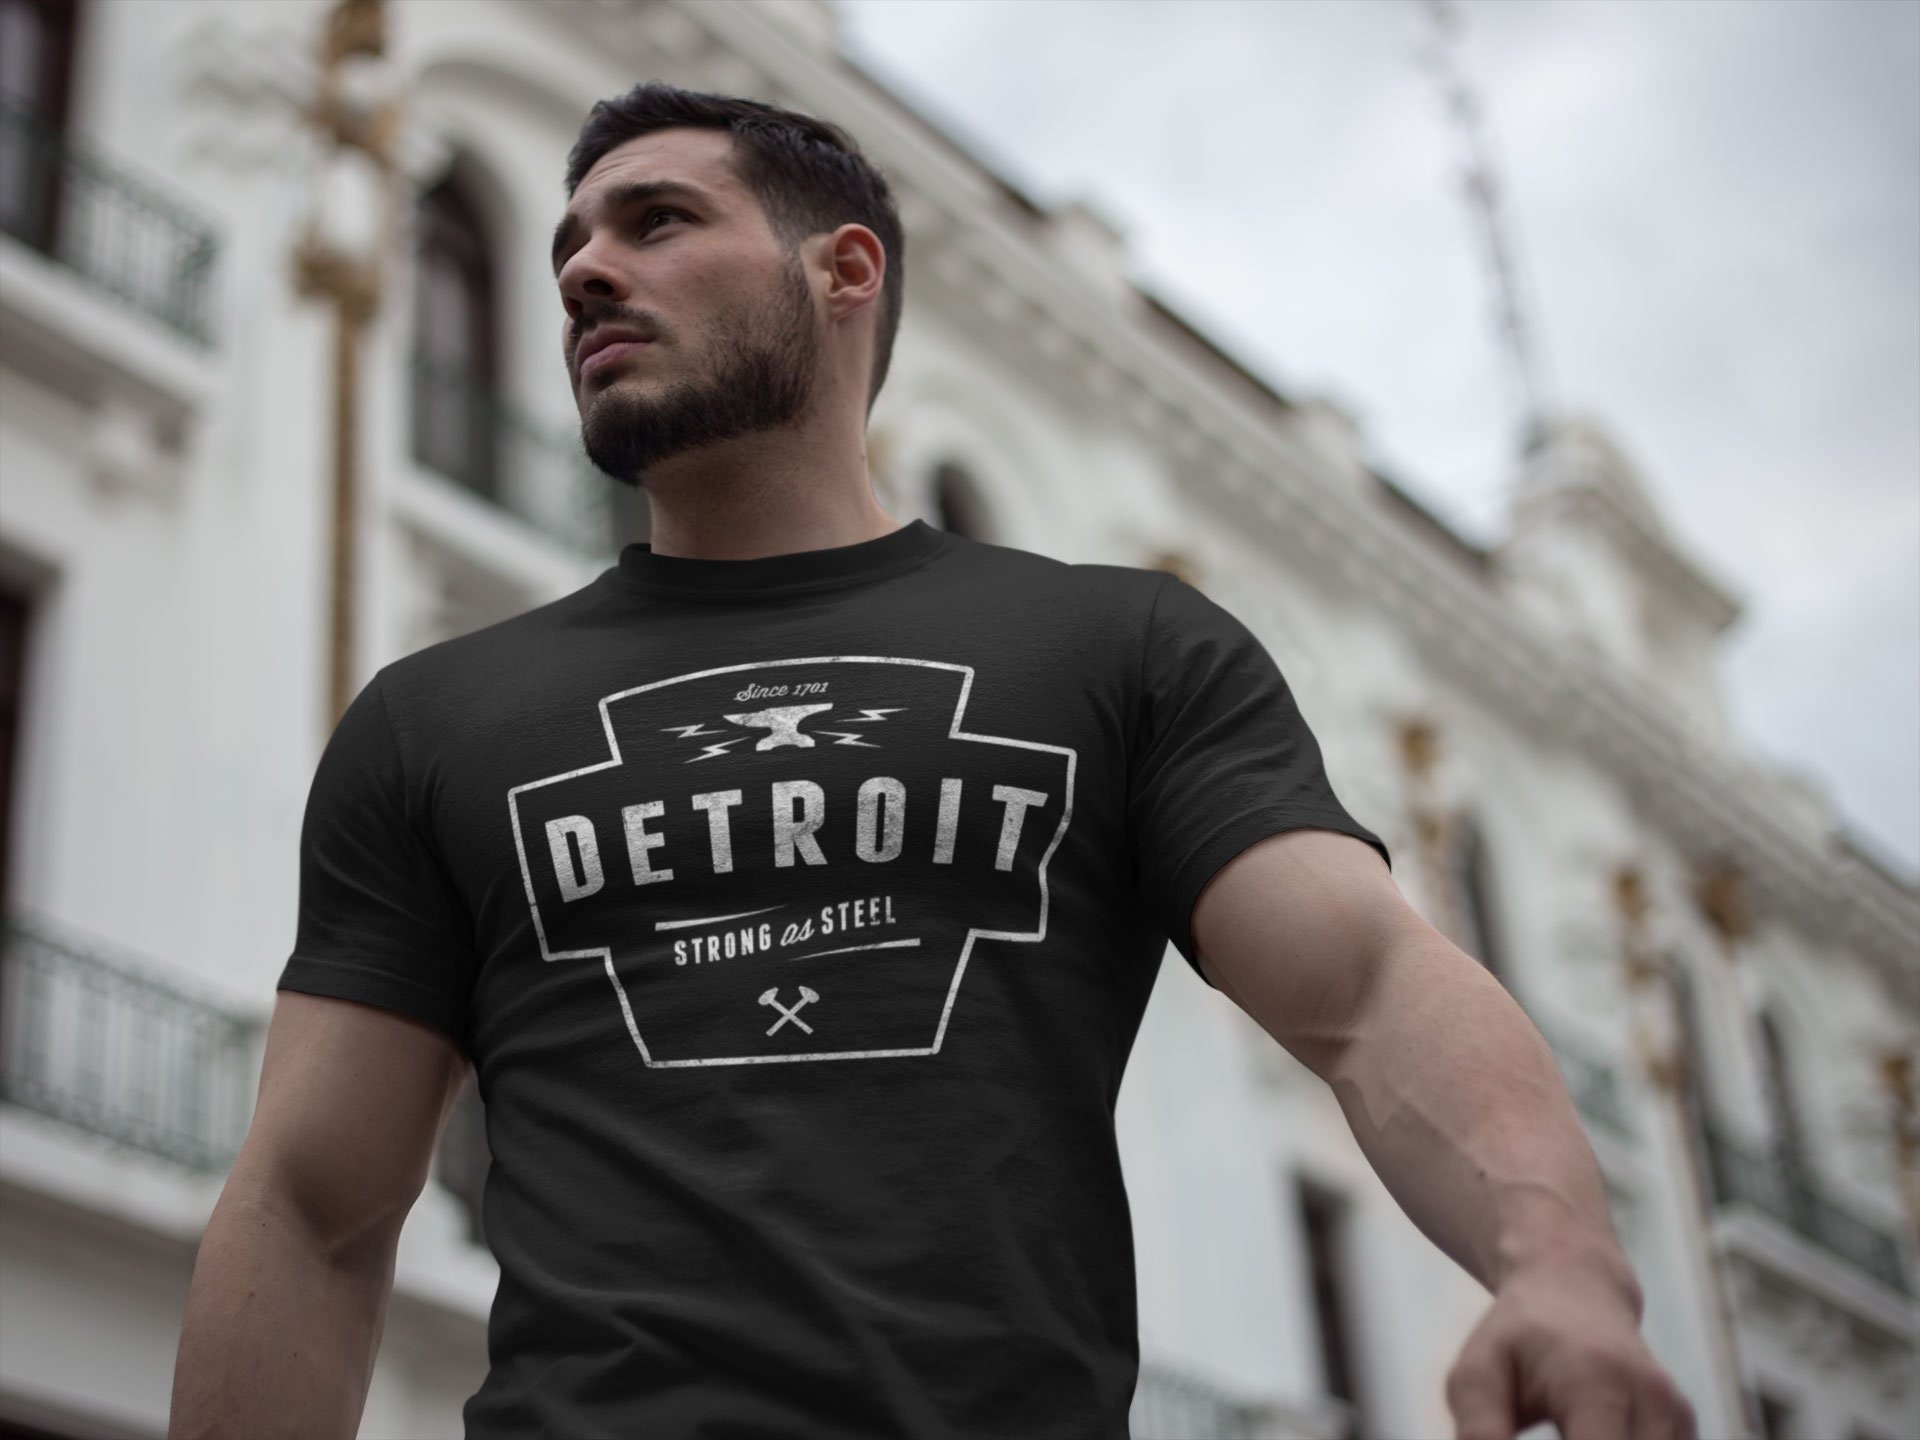 Detroit T-shirts: Detroit Strong as Steel T-shirt by Detroit 